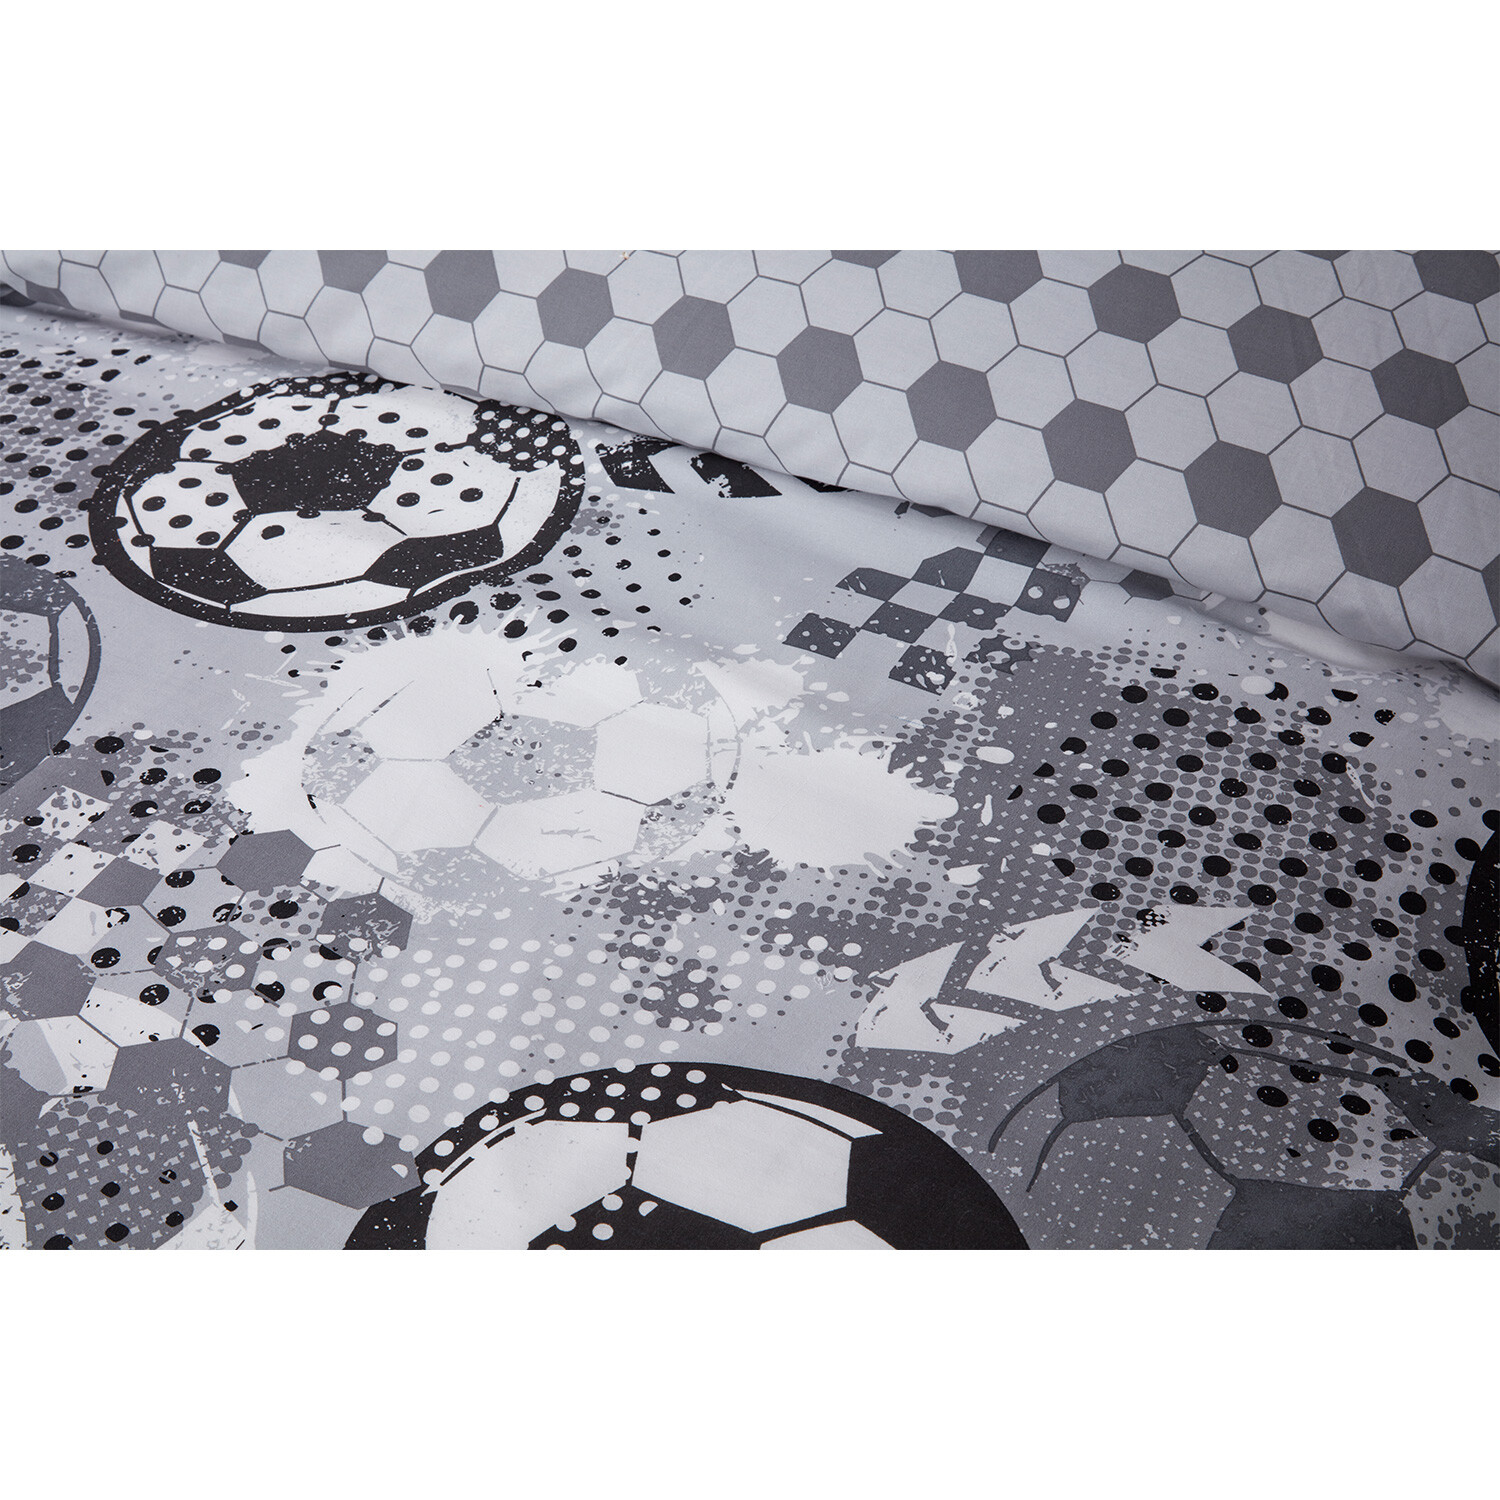 Football Duvet Cover and Pillowcase Set - Grey Image 3